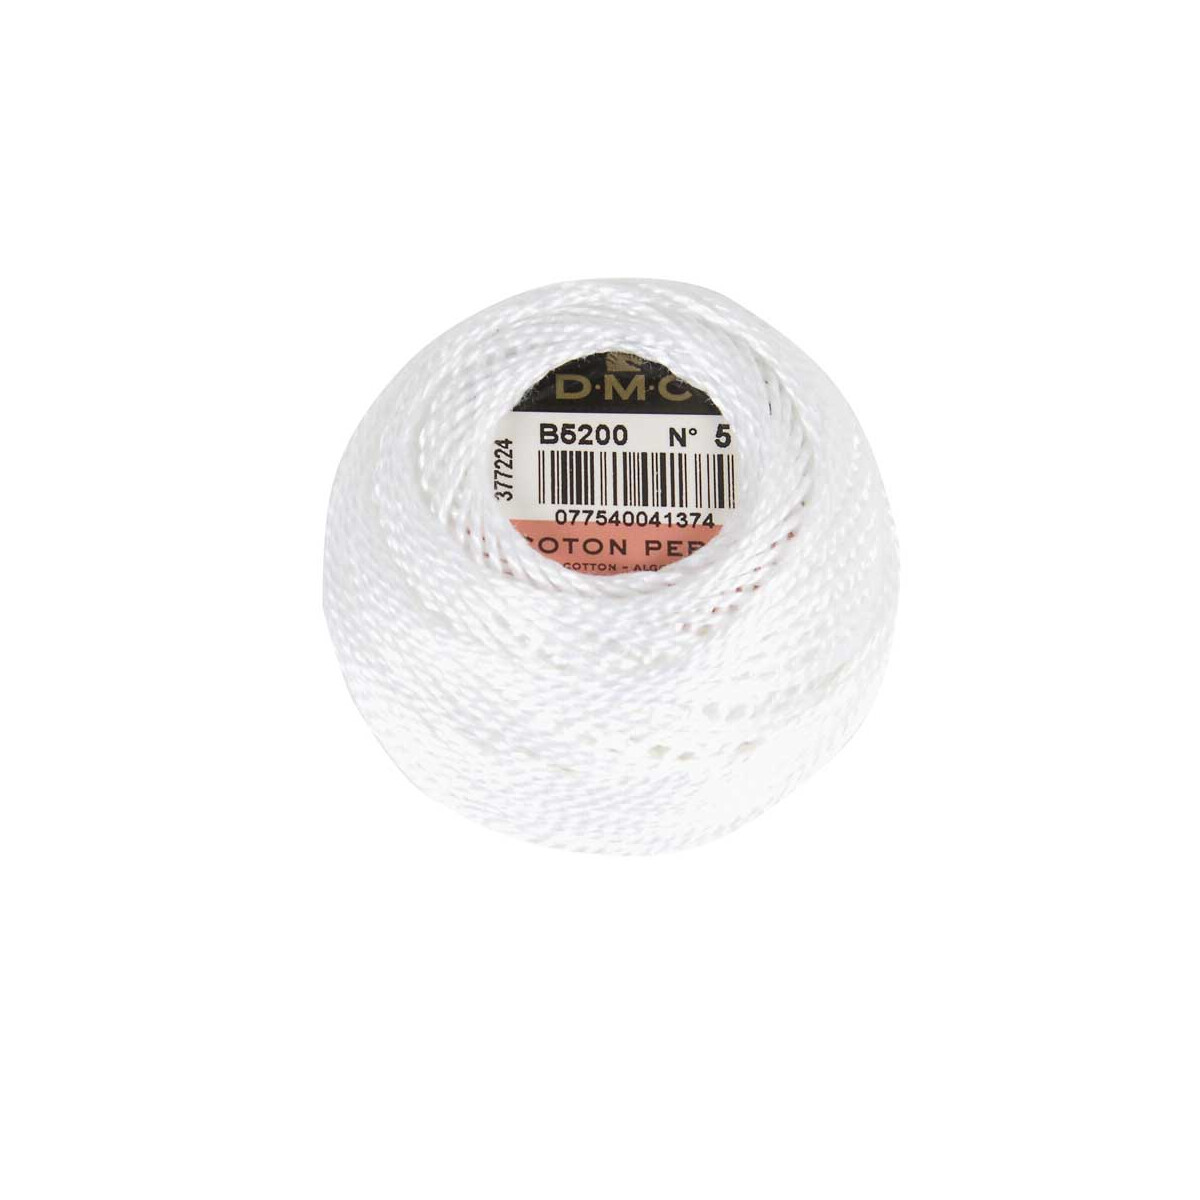 DMC Pearl Cotton on a ball Size 5, 10g, 116A/5-B5200